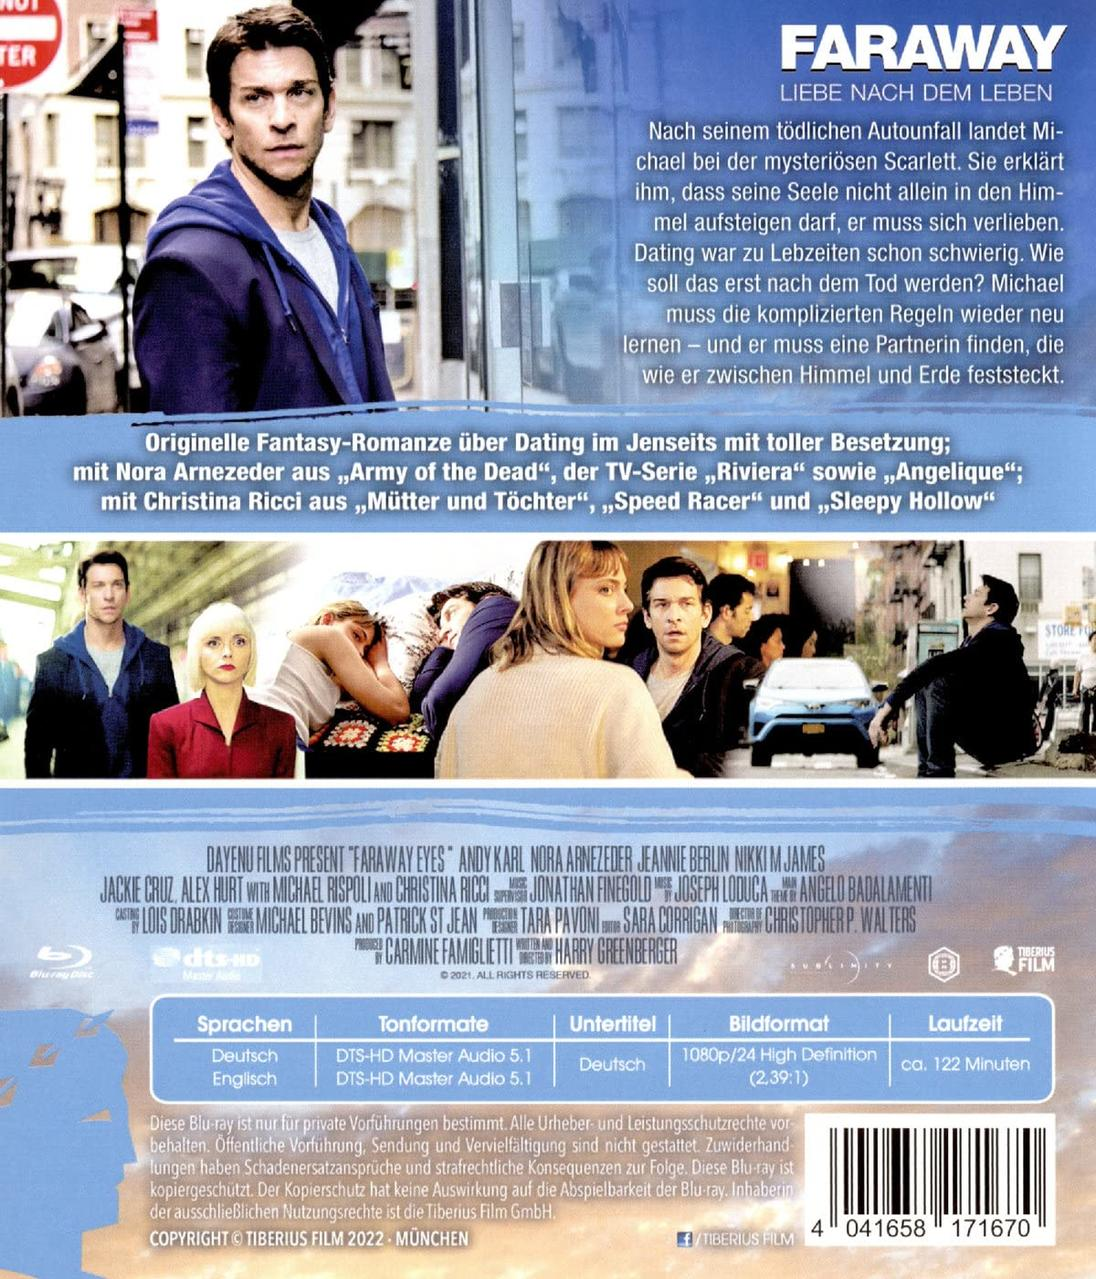 Faraway - Blu-ray dem nach Liebe Leben